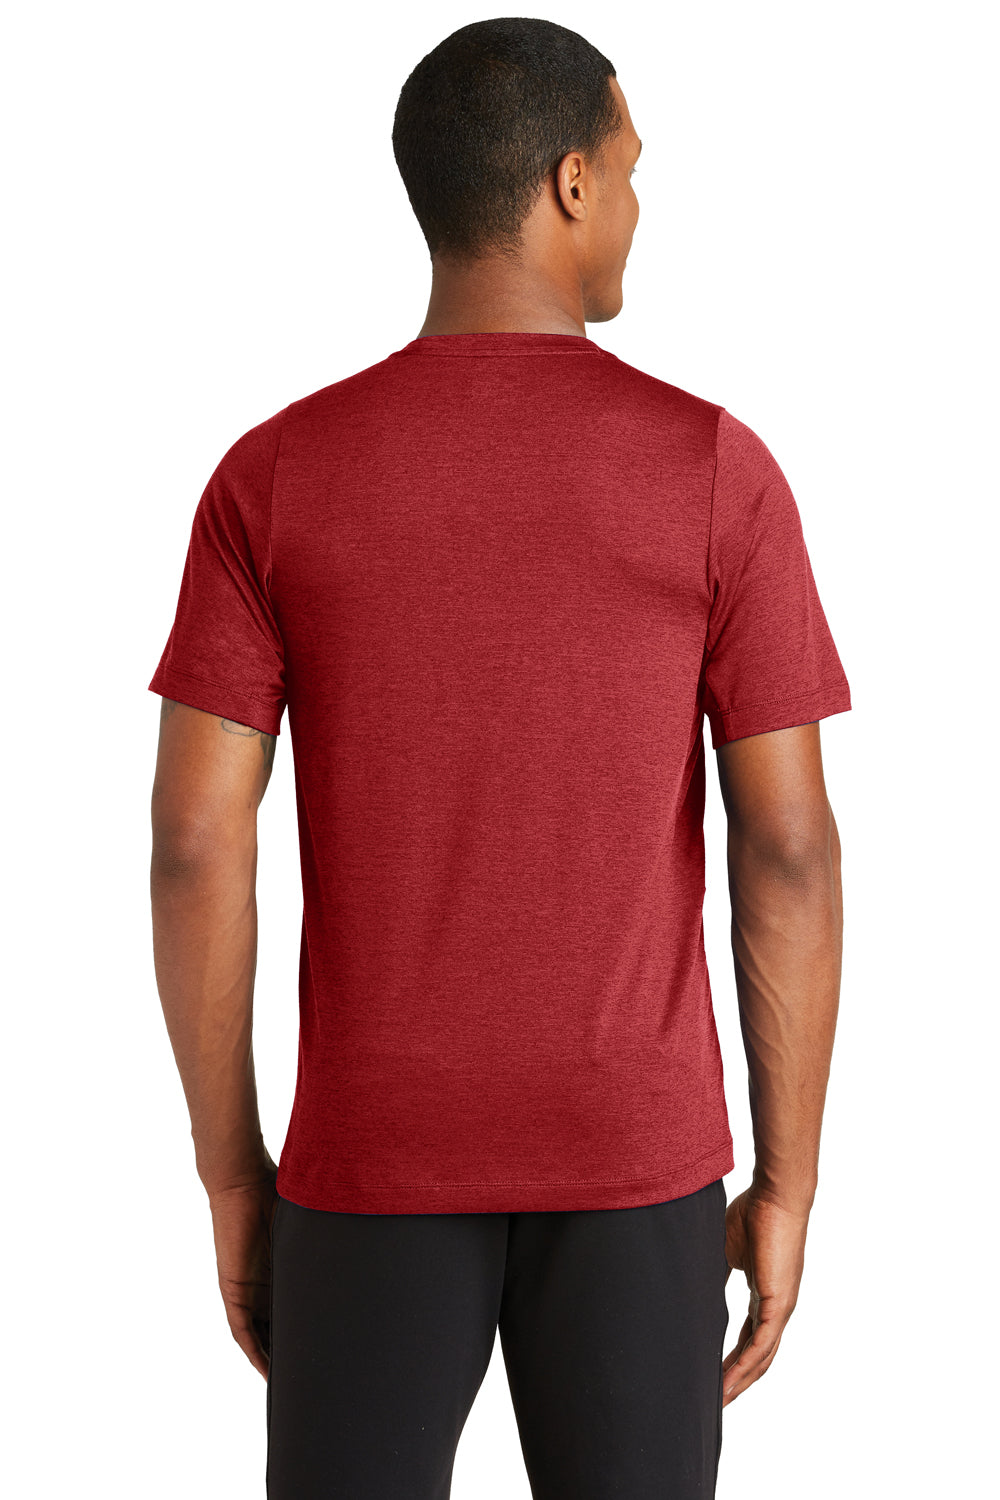 New Era NEA200 Mens Series Performance Jersey Moisture Wicking Short Sleeve Crewneck T-Shirt Crimson Red Back